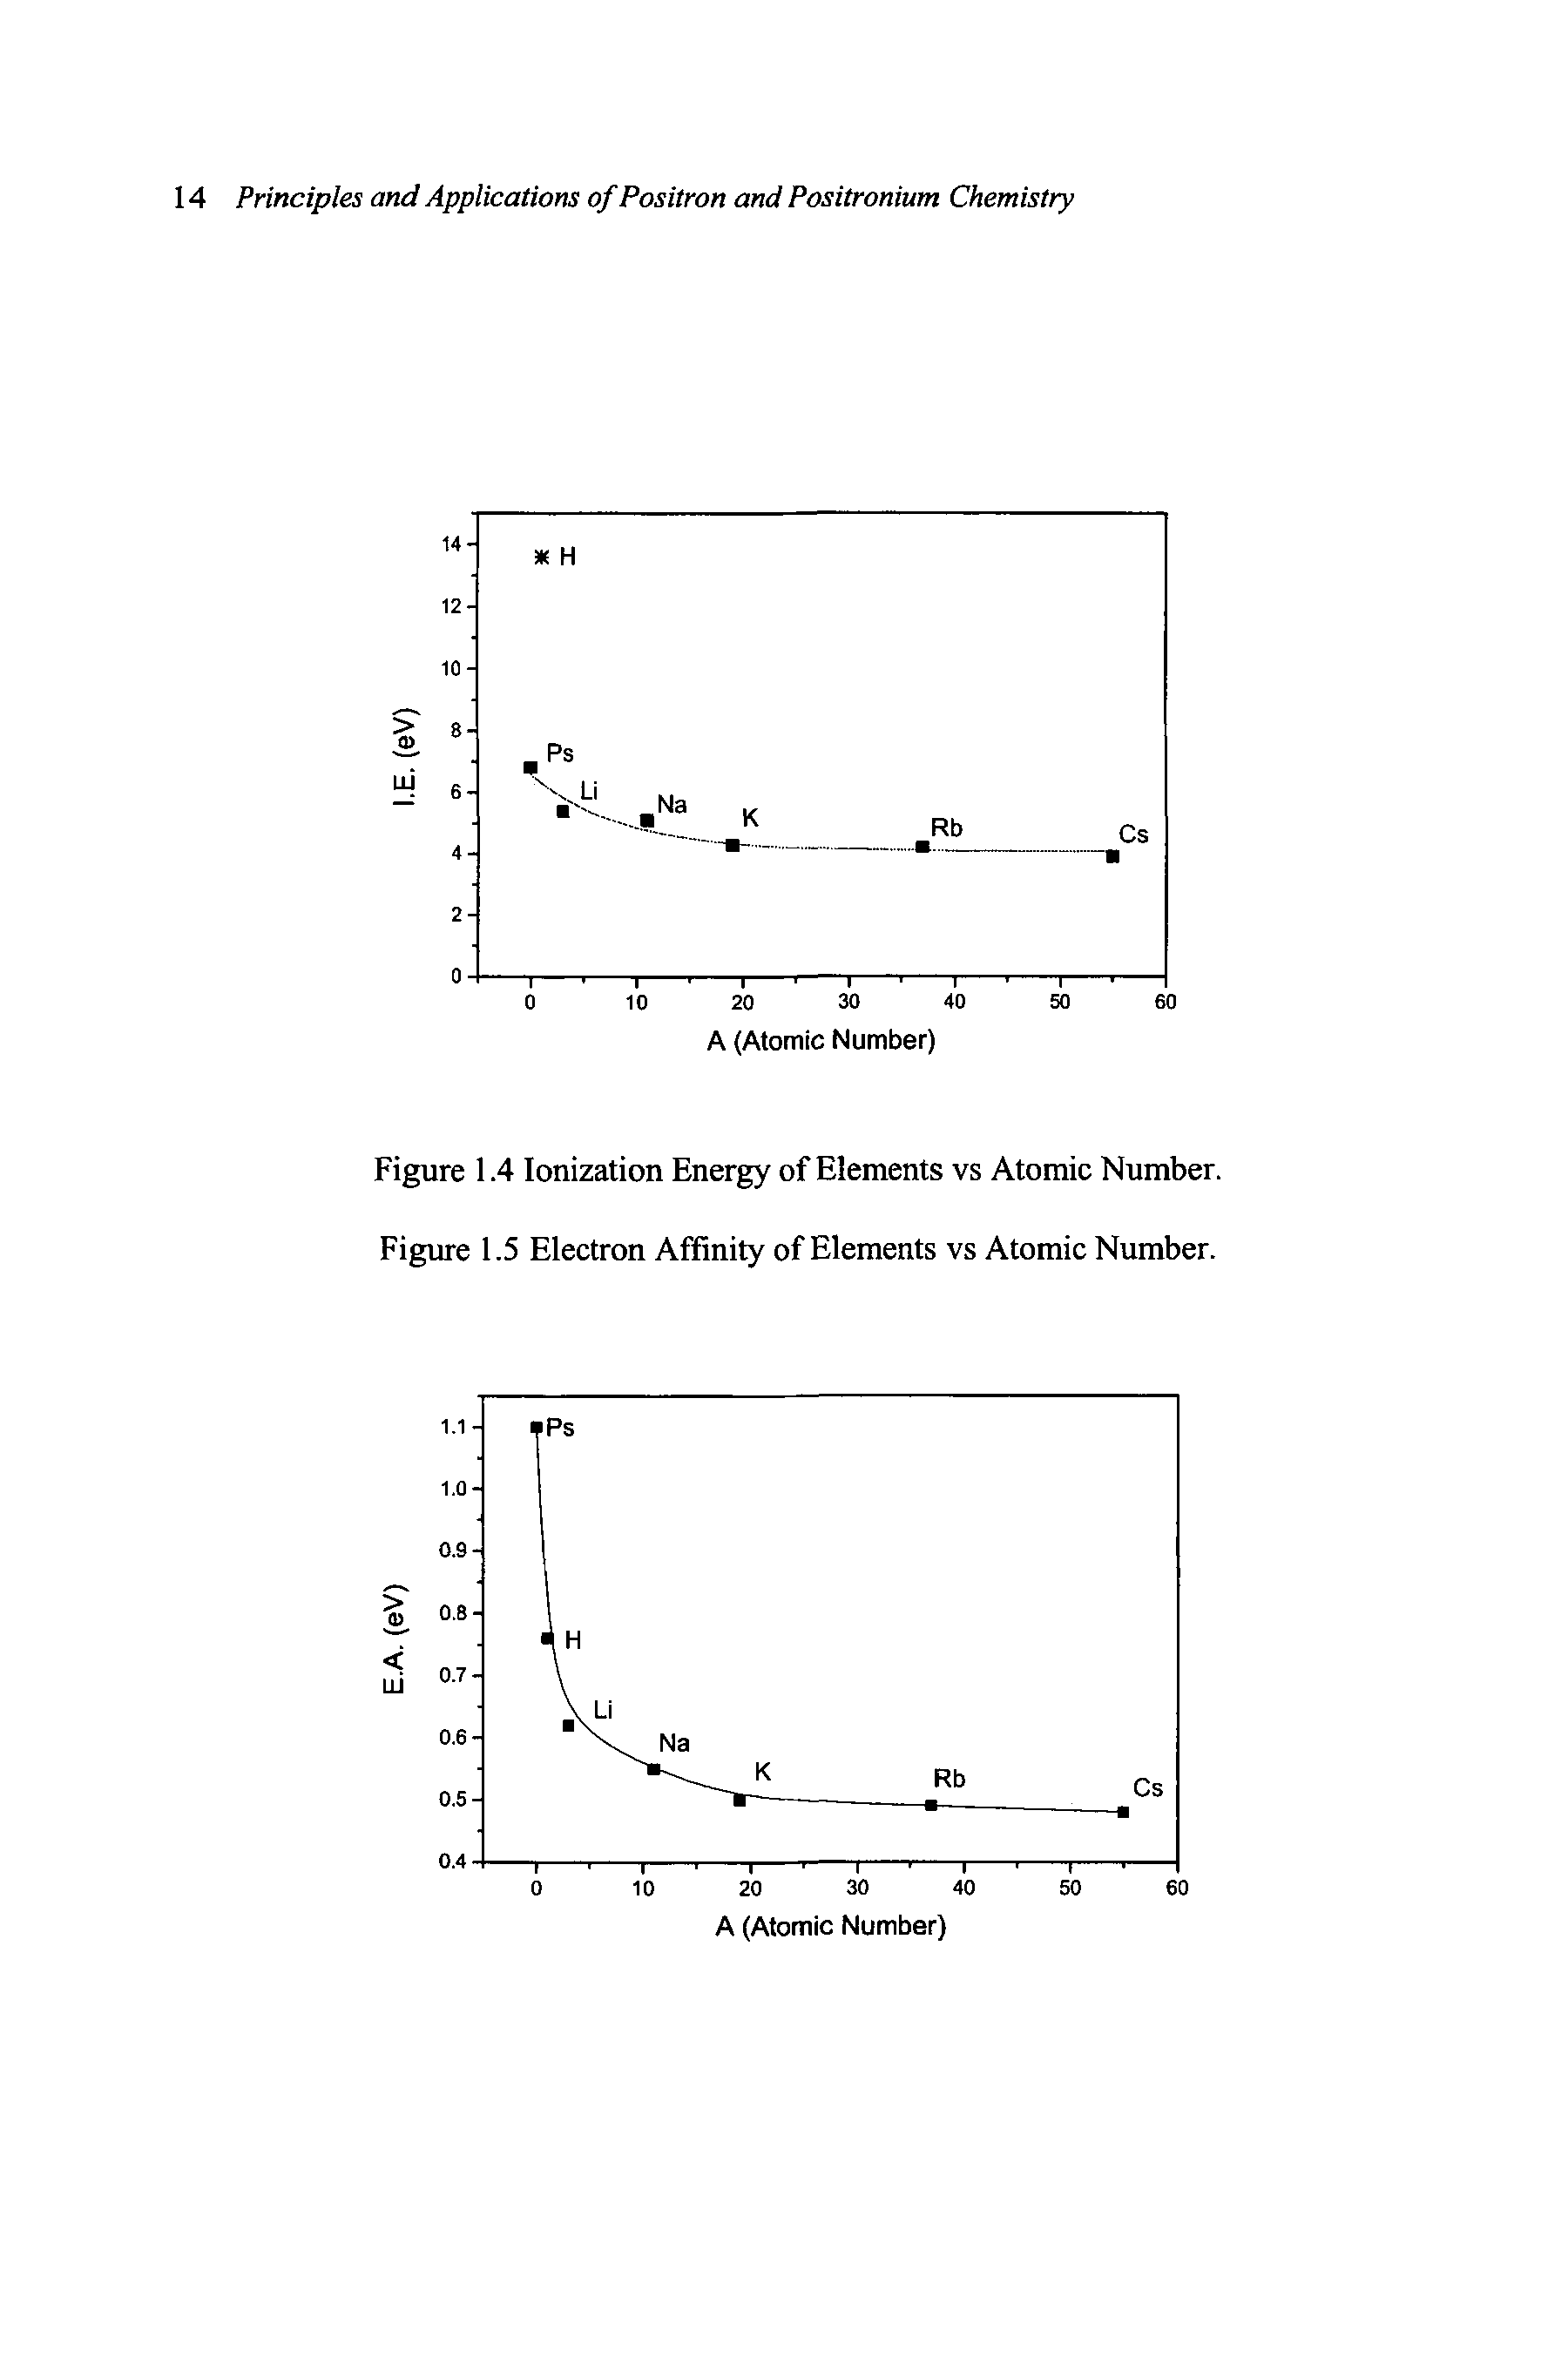 Figure 1.4 Ionization Energy of Elements vs Atomic Number. Figure 1.5 Electron Affinity of Elements vs Atomic Number.